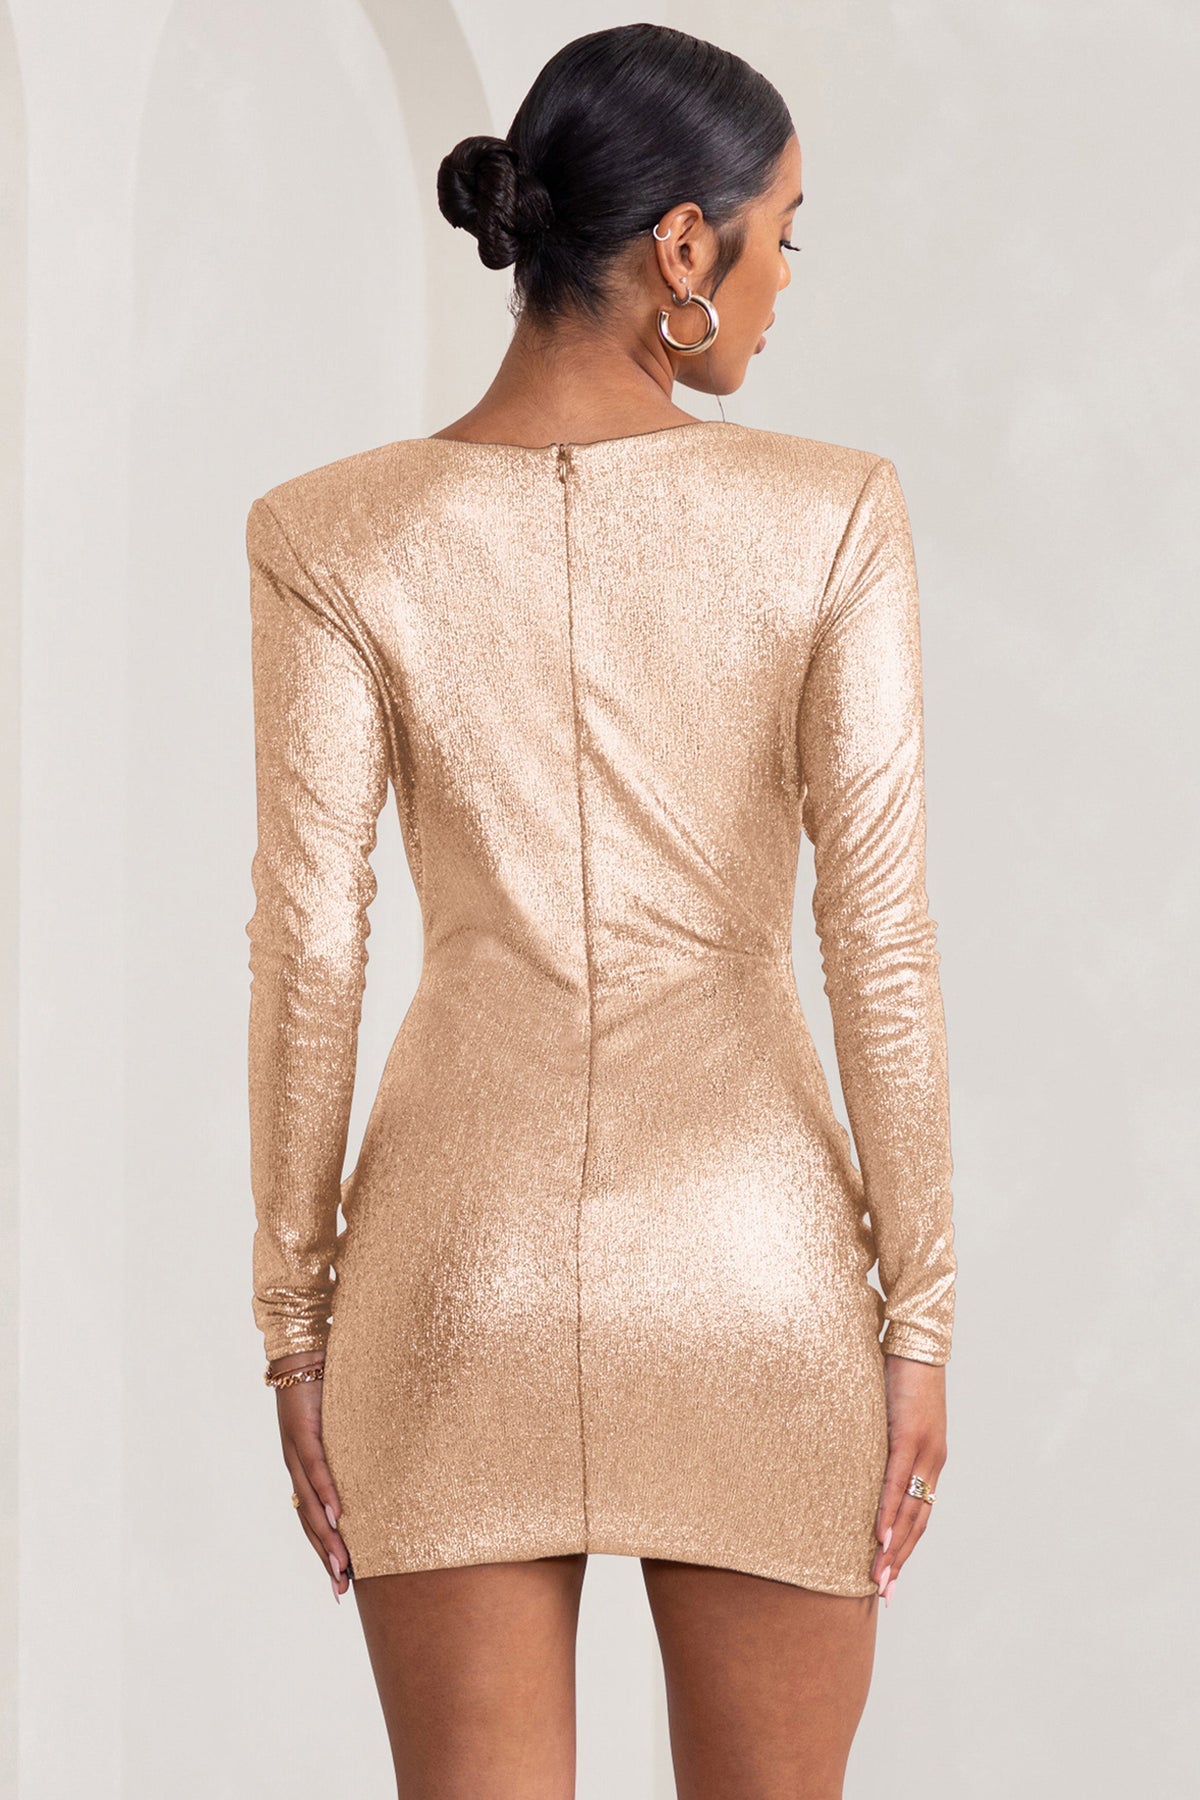 Buy Lavishray Mini Bodycon Zara Sequin Western Sleeveless Short Dress for  Women (Black) (X-Small) at Amazon.in